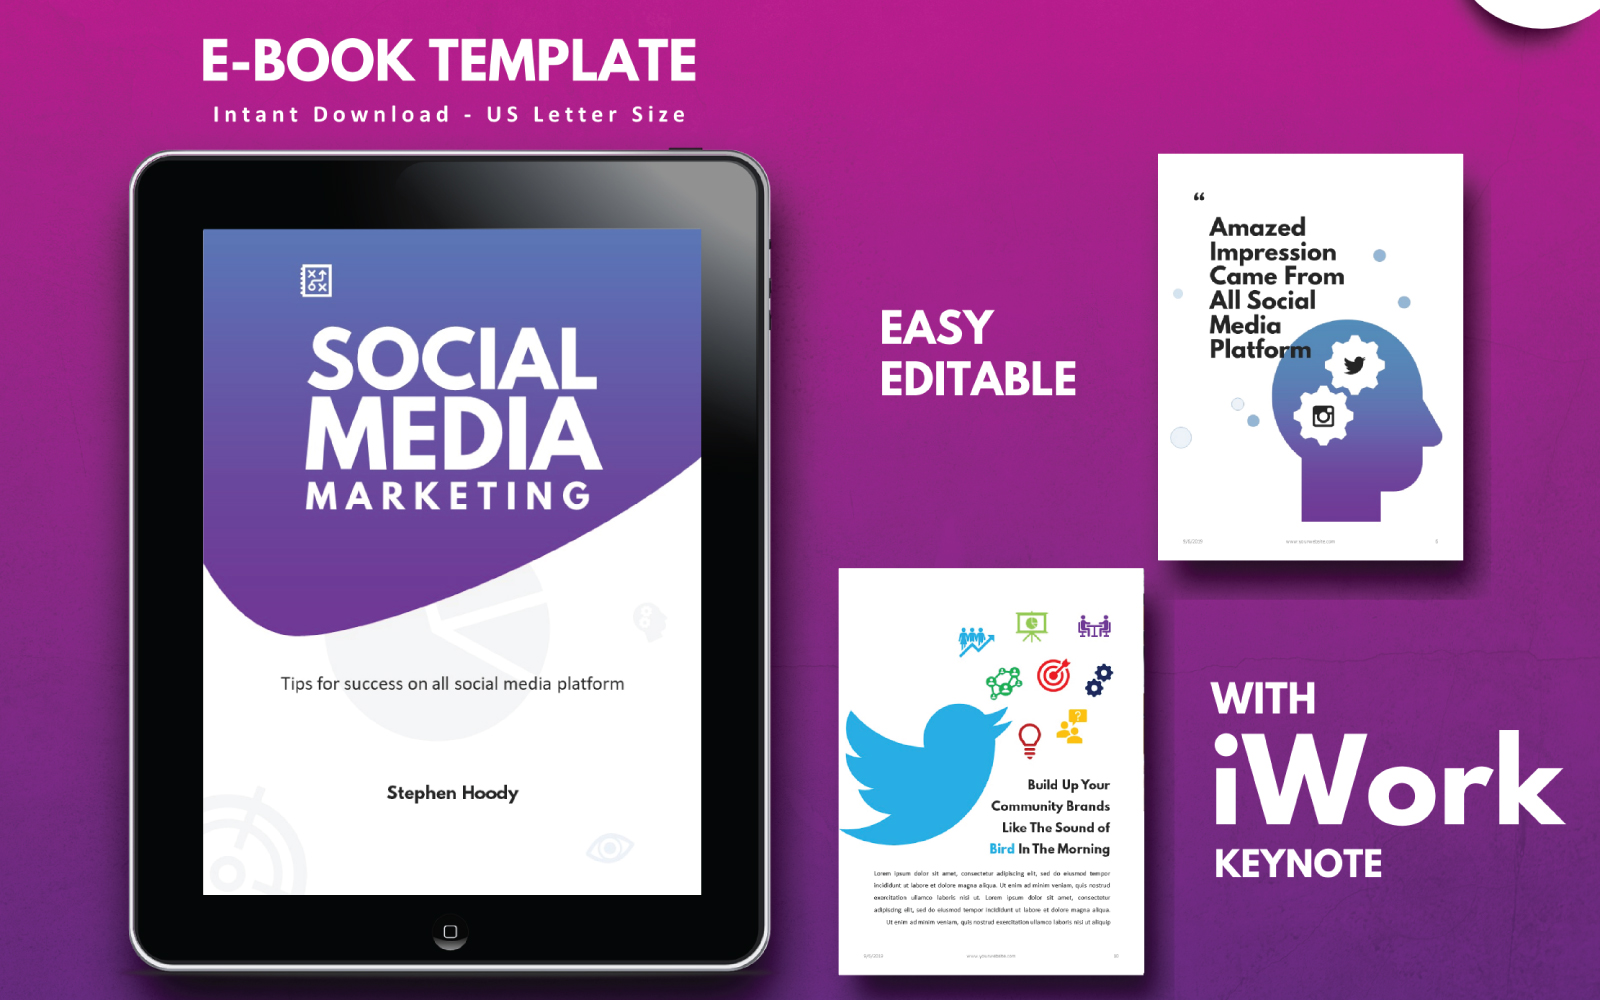 Social Media Tips and Marketing eBook Keynote Template Presentation